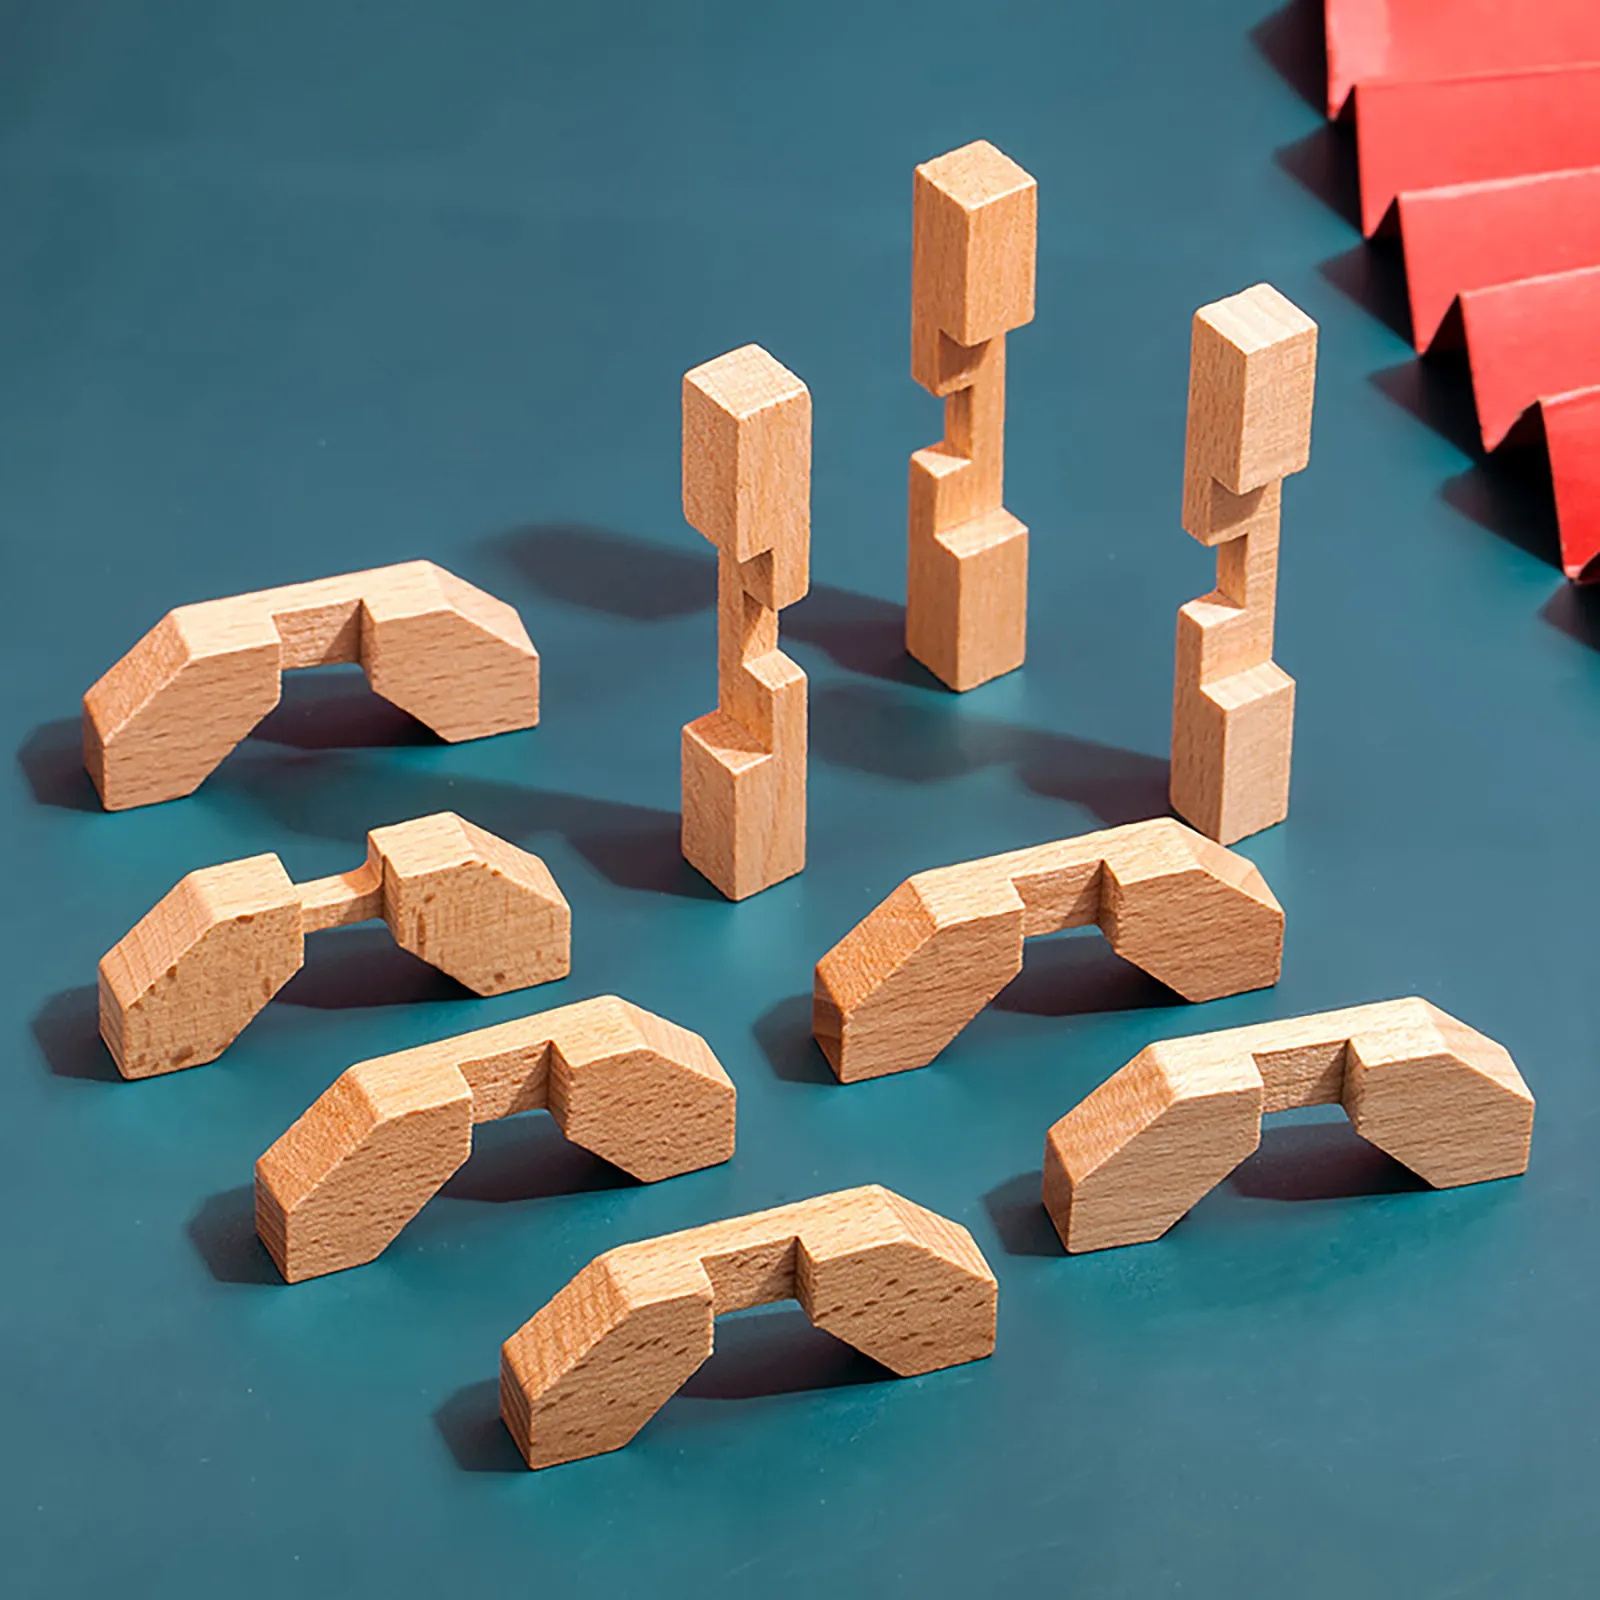 Classic IQ 3D Wooden Puzzle Mind Brain Teaser Interlocking Burr Puzzles Game for Adults Children Kids